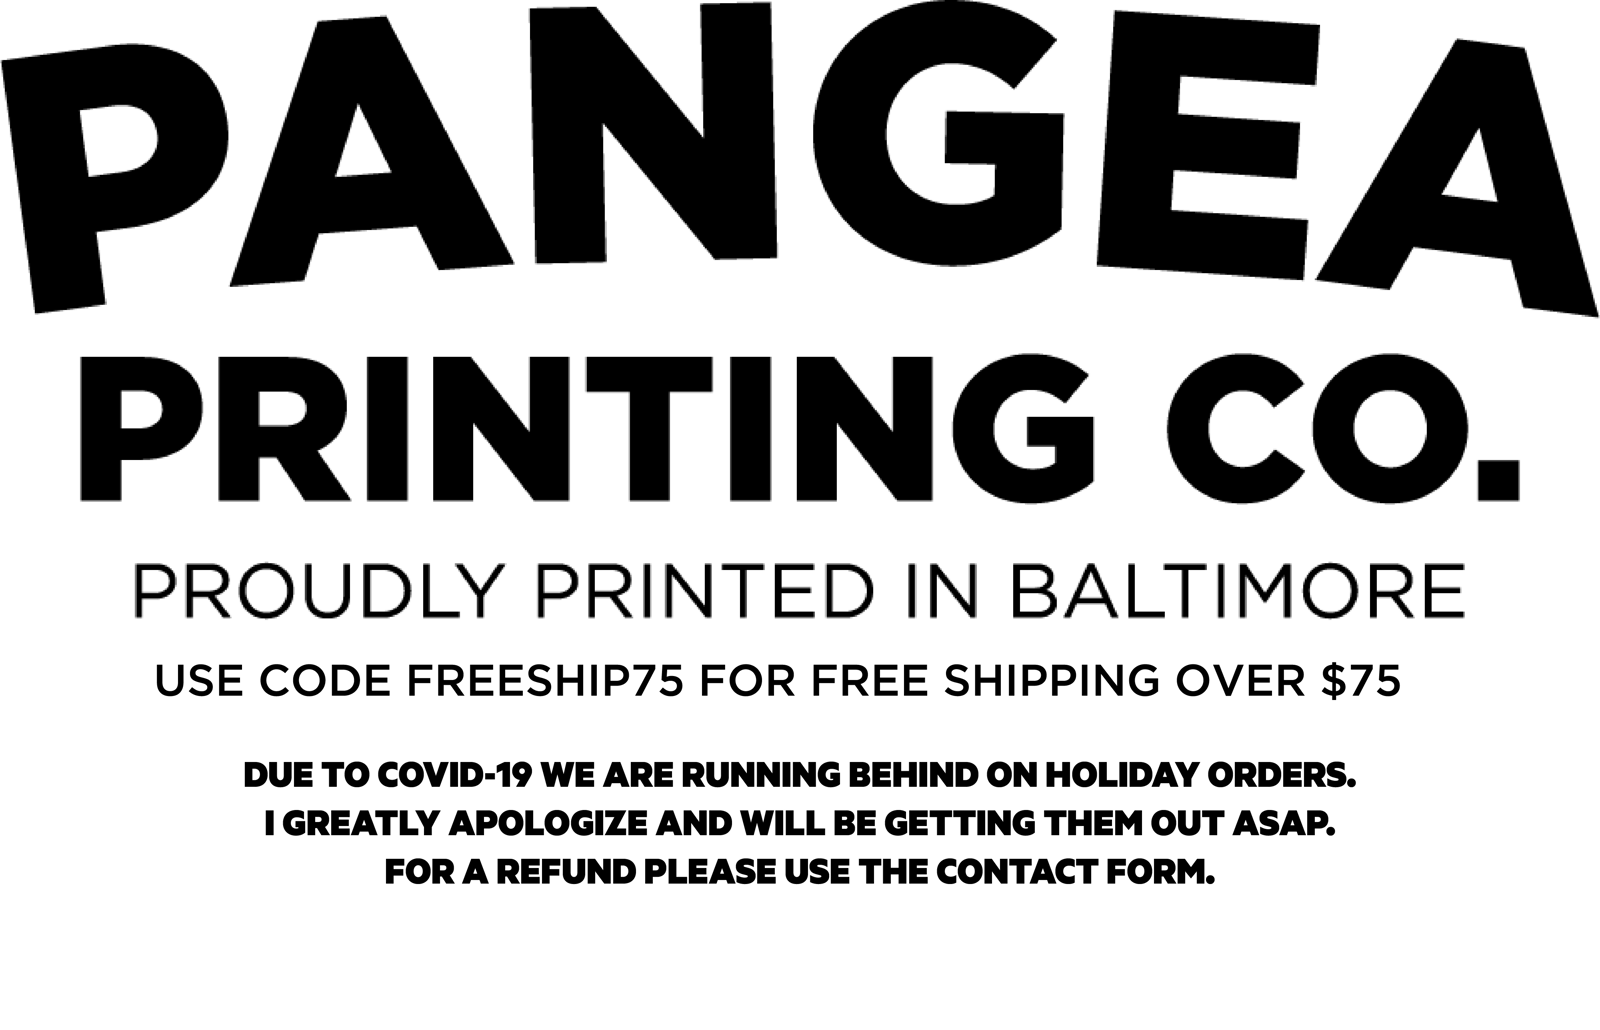 Pangea Printing Co.